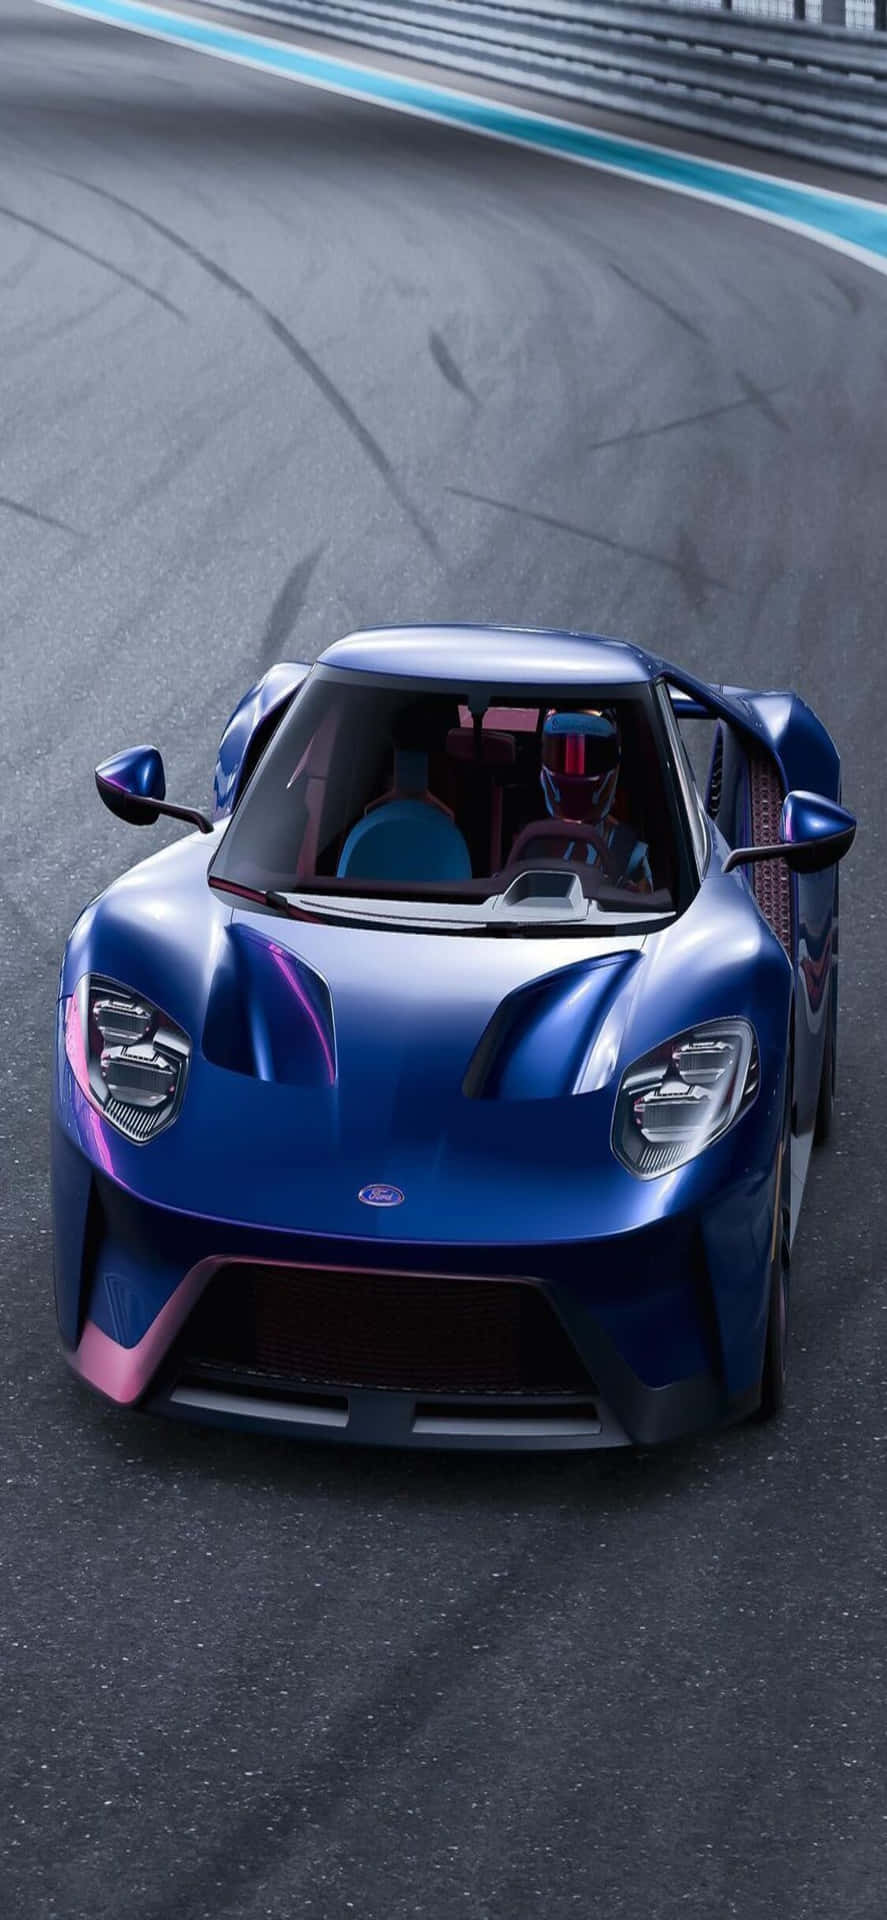 Fondode Pantalla Del Iphone X Con El Ford Gt Azul De Forza Motorsport 7.